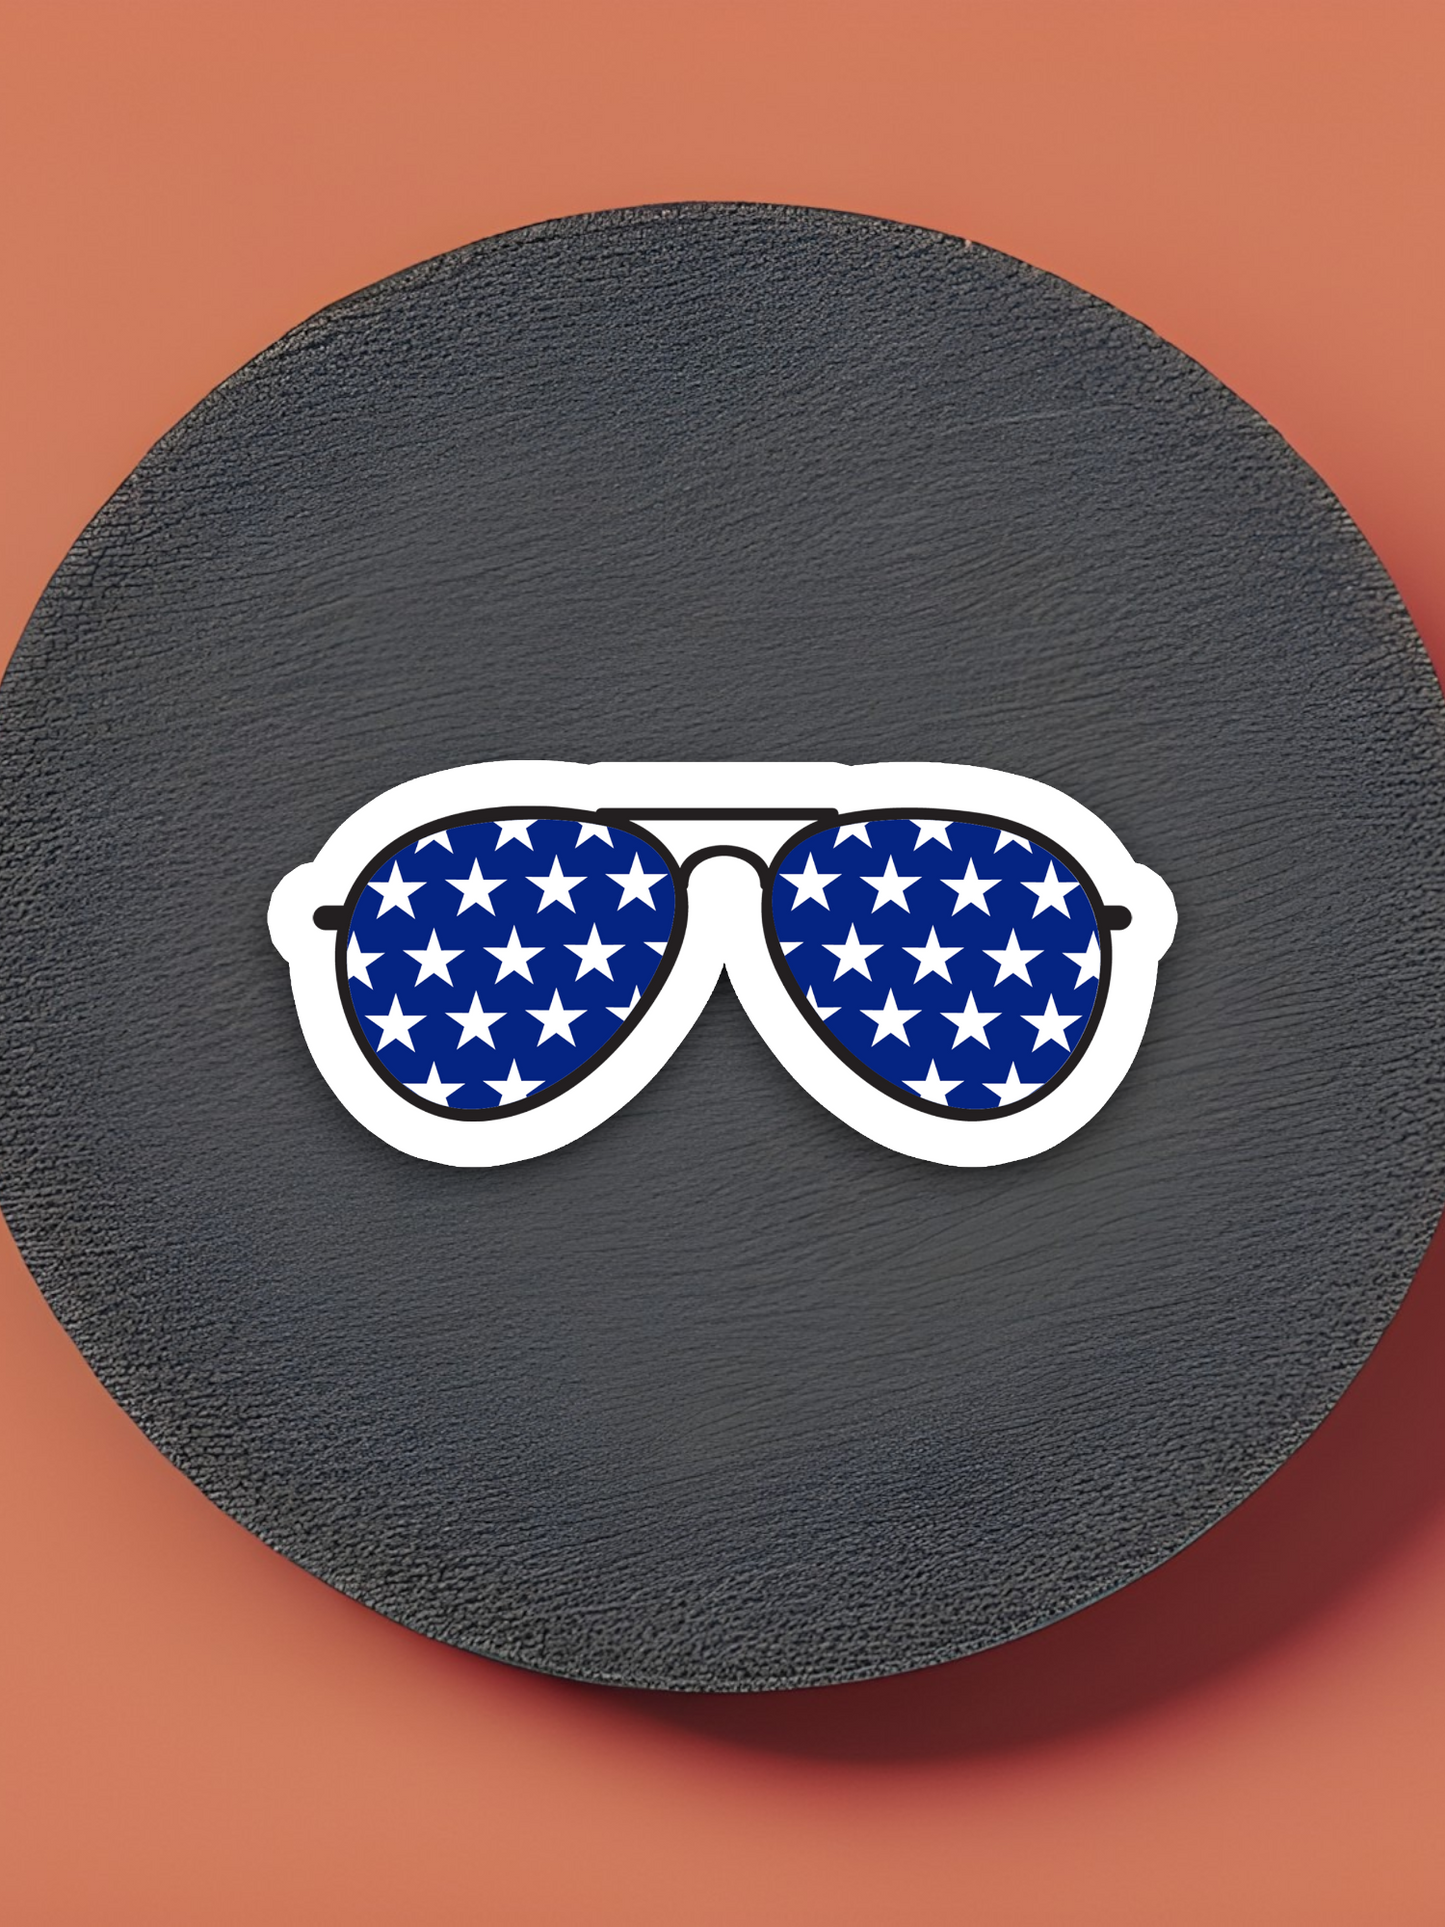 4 of July Glasses Sticker